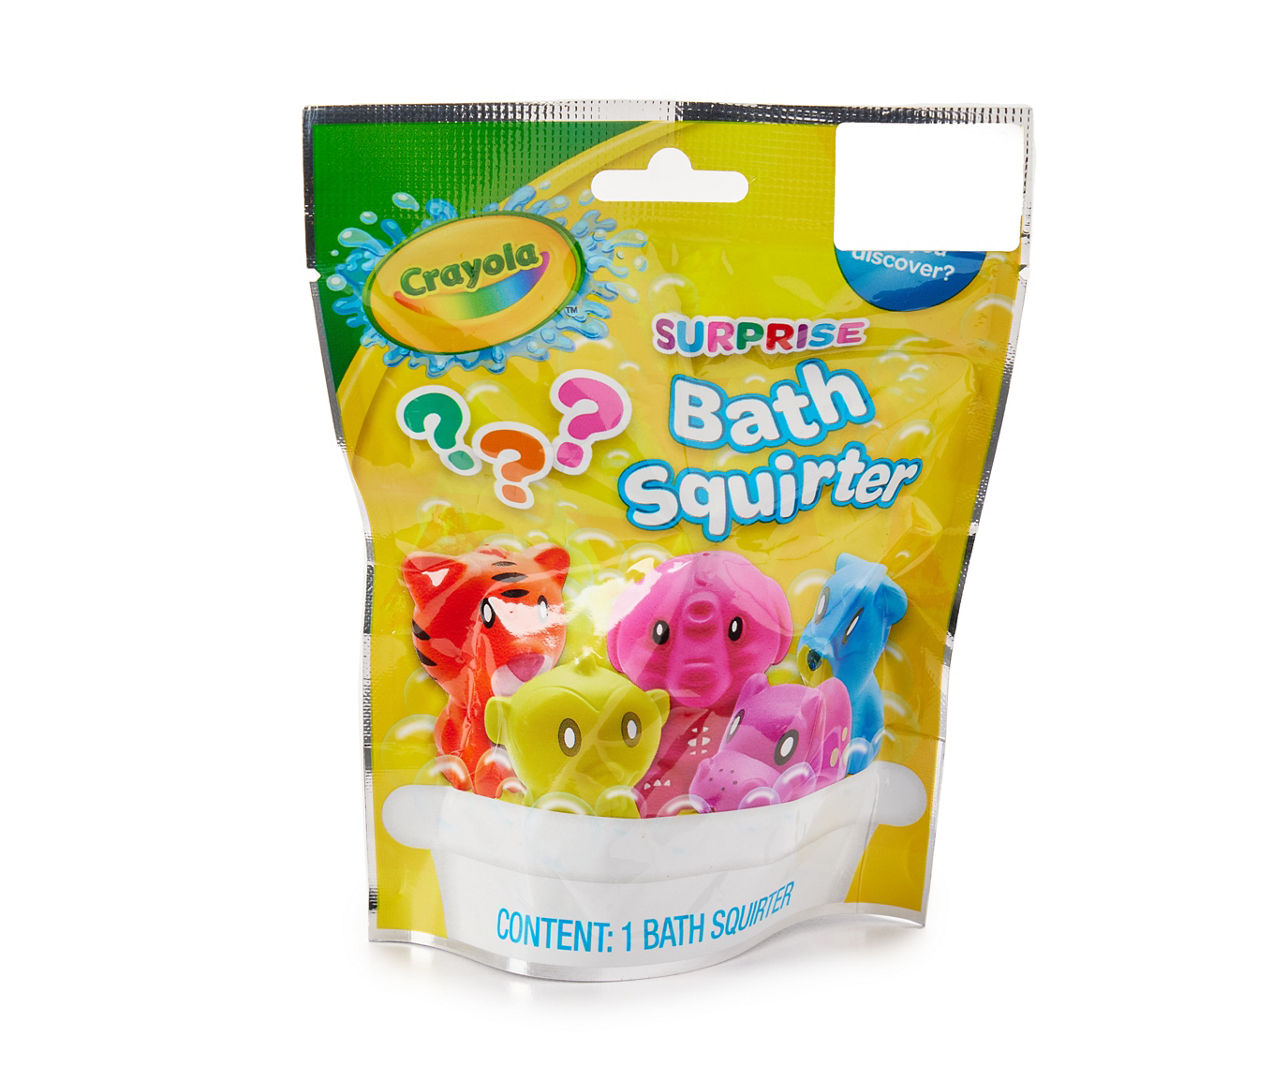 Crayola Surprise Bath Squirter